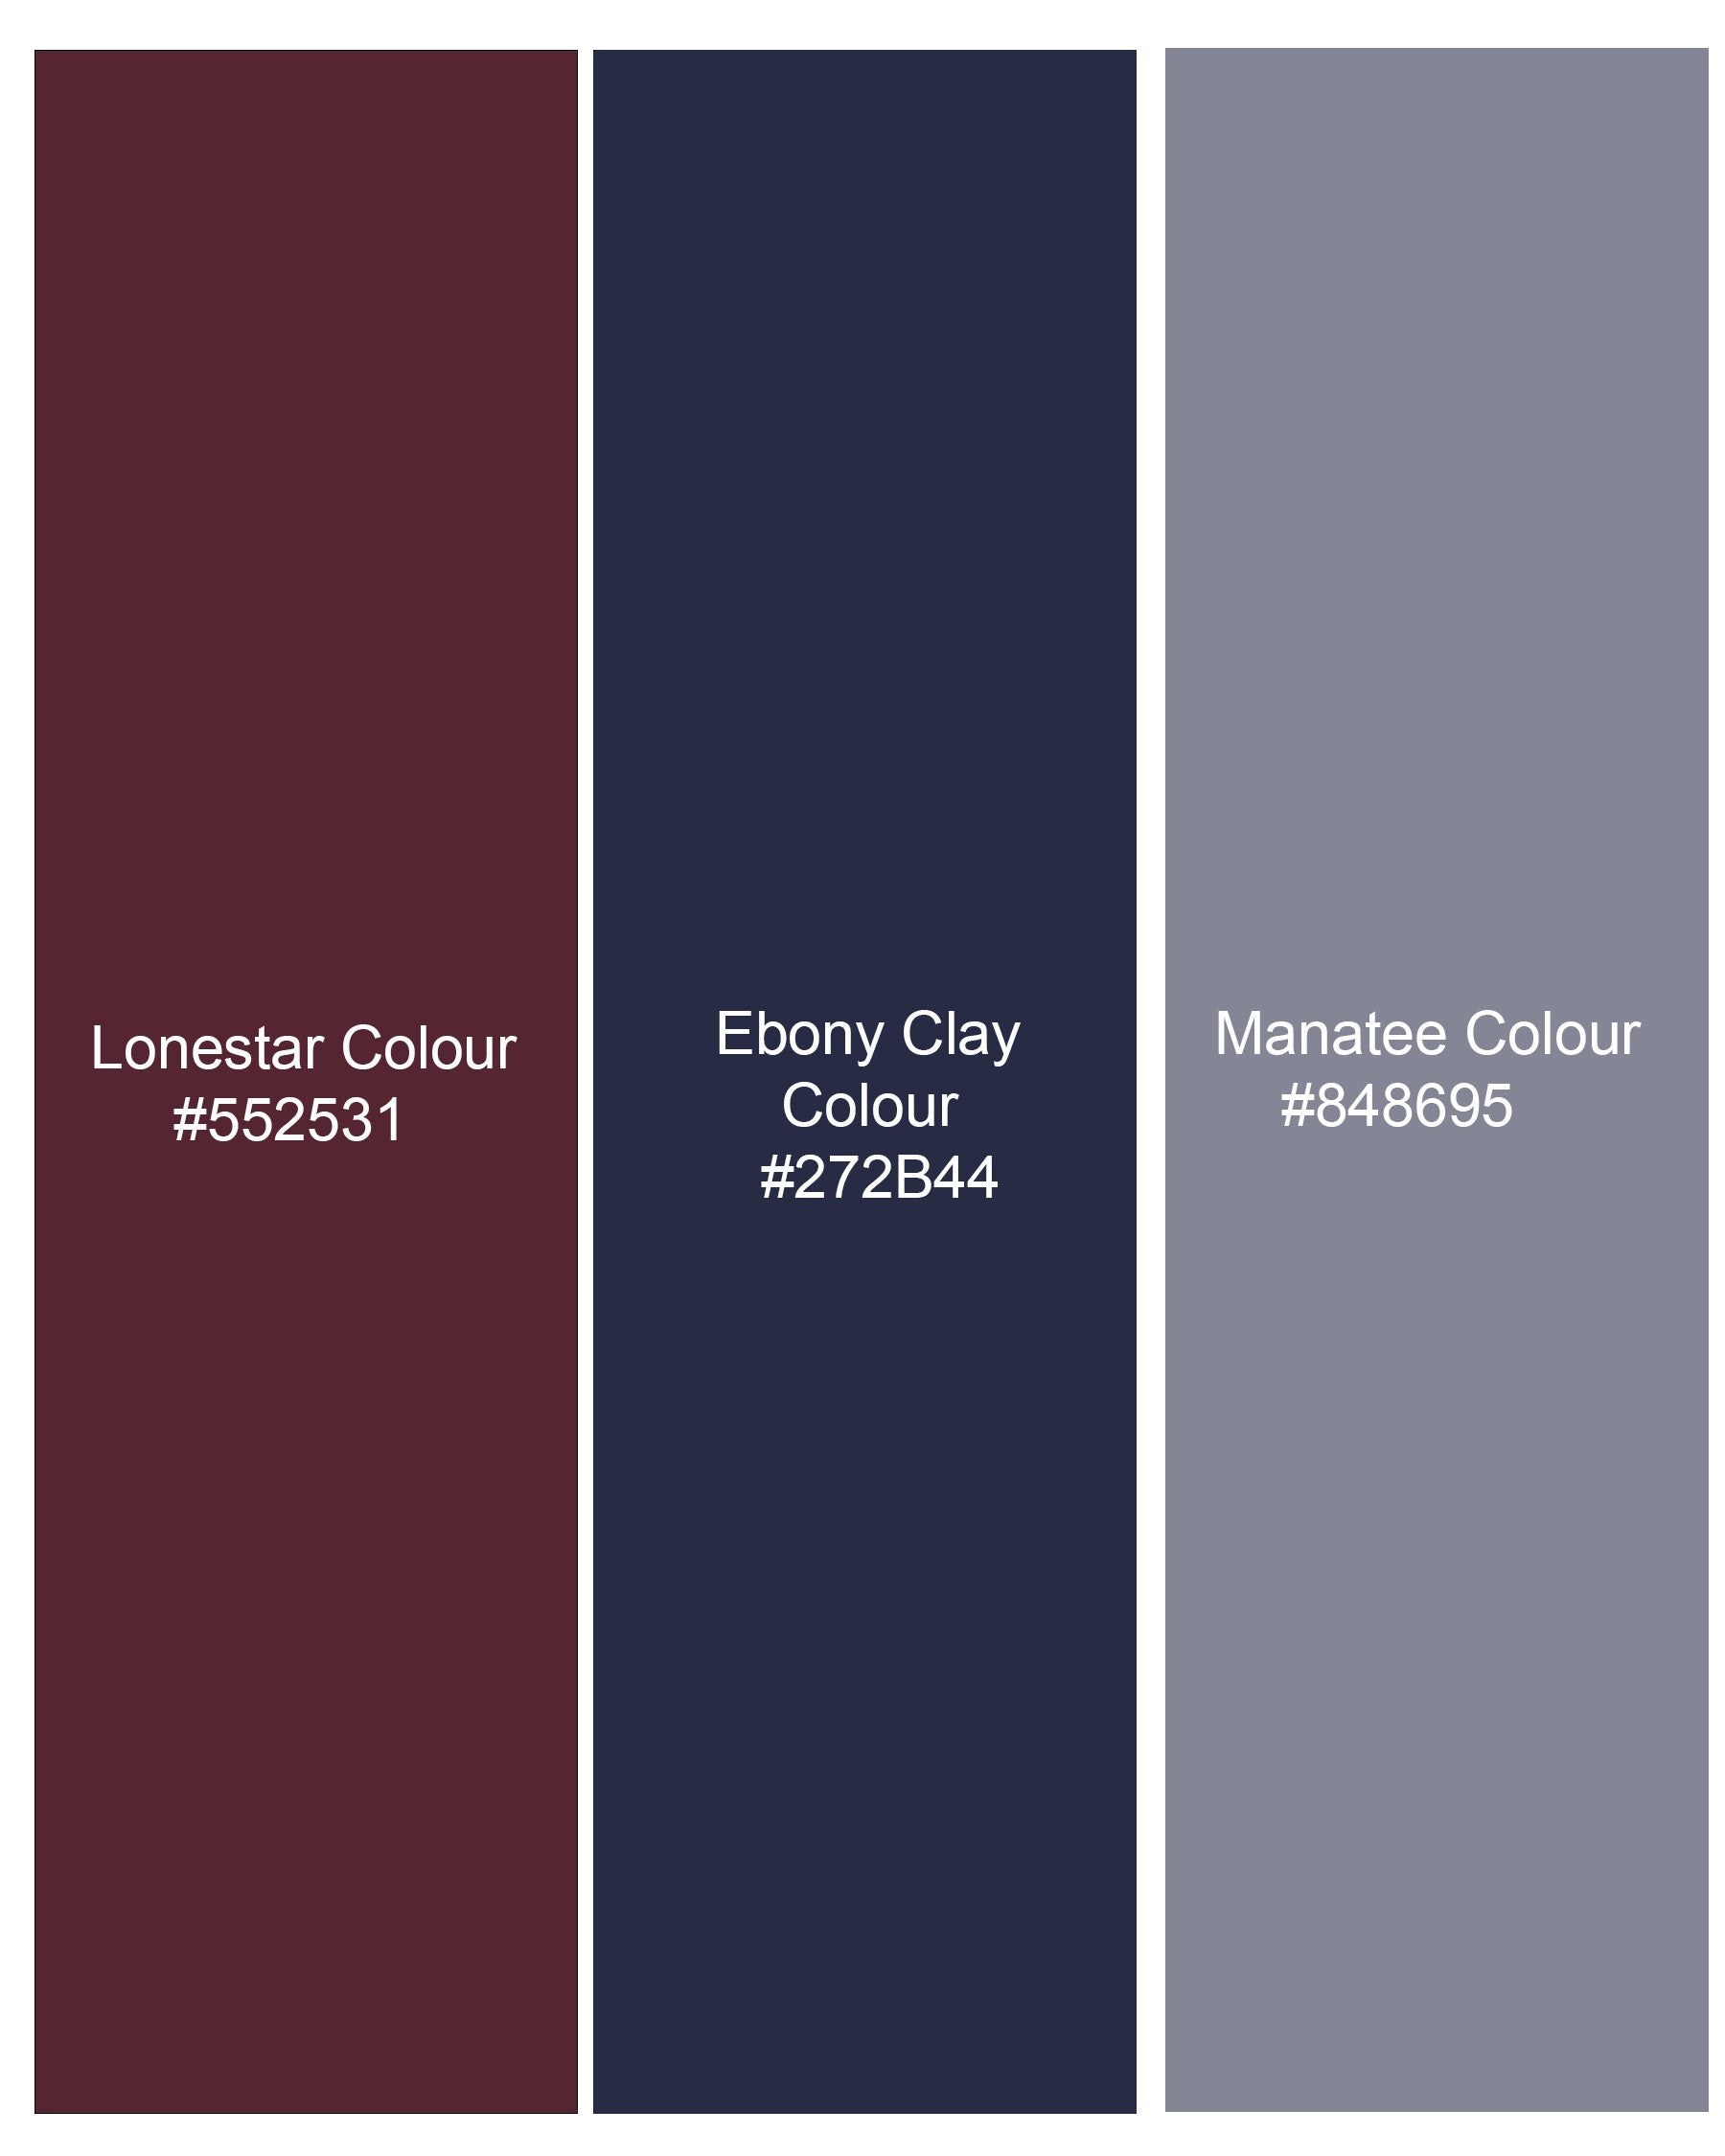 Half Lonestar Maroon and Half Ebony Clay Navy Blue Ditsy Printed Twill Premium Cotton Designer Shirt 8240-P117-38,8240-P117-H-38,8240-P117-39,8240-P117-H-39,8240-P117-40,8240-P117-H-40,8240-P117-42,8240-P117-H-42,8240-P117-44,8240-P117-H-44,8240-P117-46,8240-P117-H-46,8240-P117-48,8240-P117-H-48,8240-P117-50,8240-P117-H-50,8240-P117-52,8240-P117-H-52